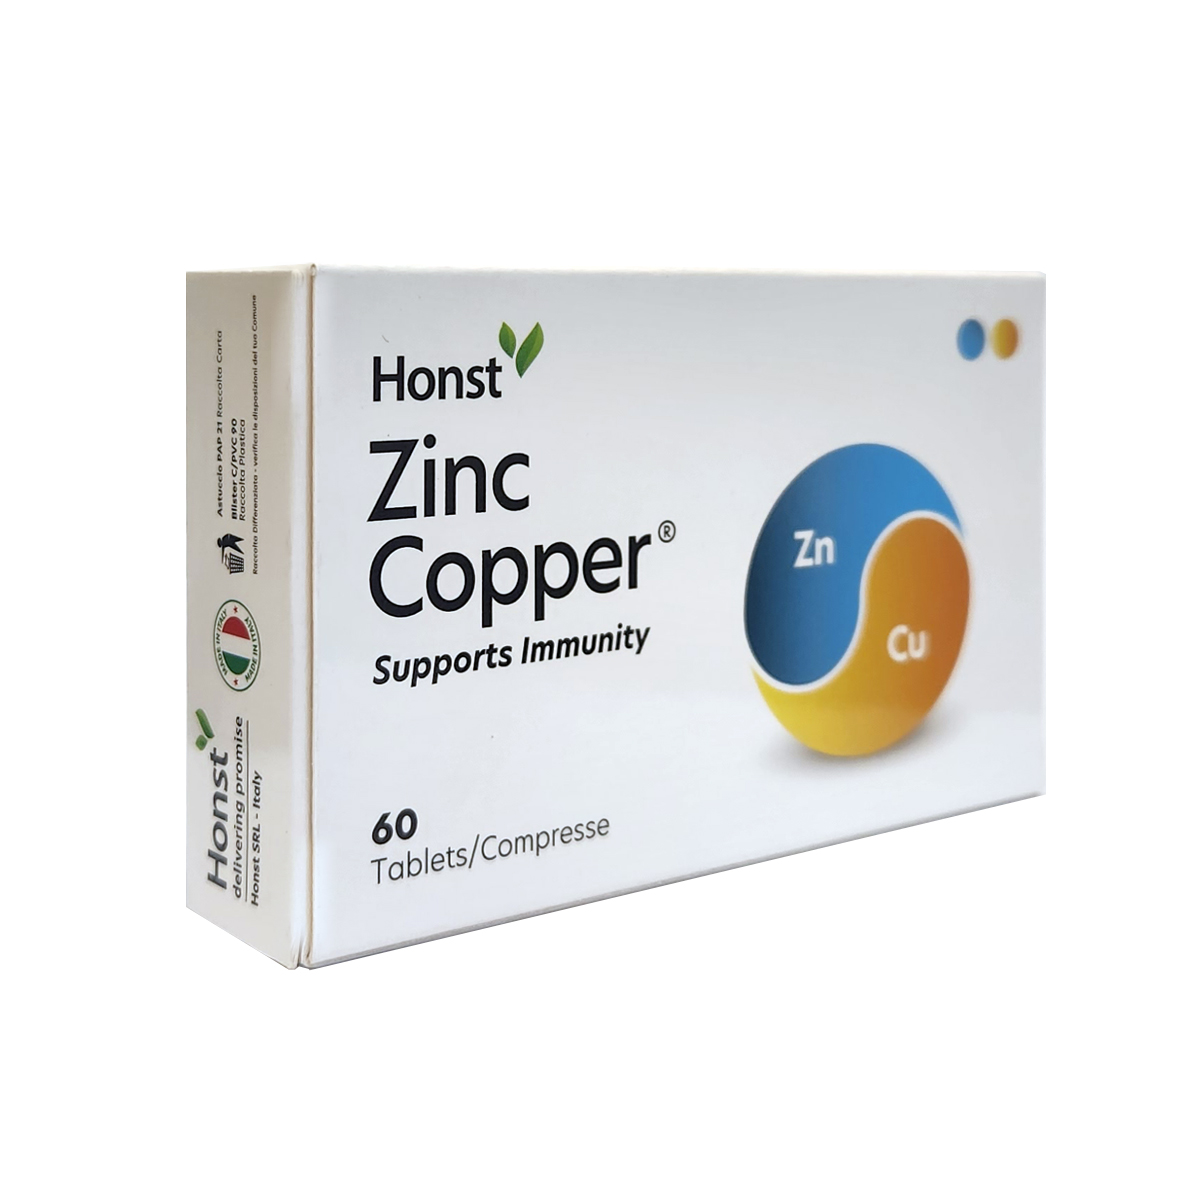 Zinc Copper, Support immunity ,60 Tablets/Compresse